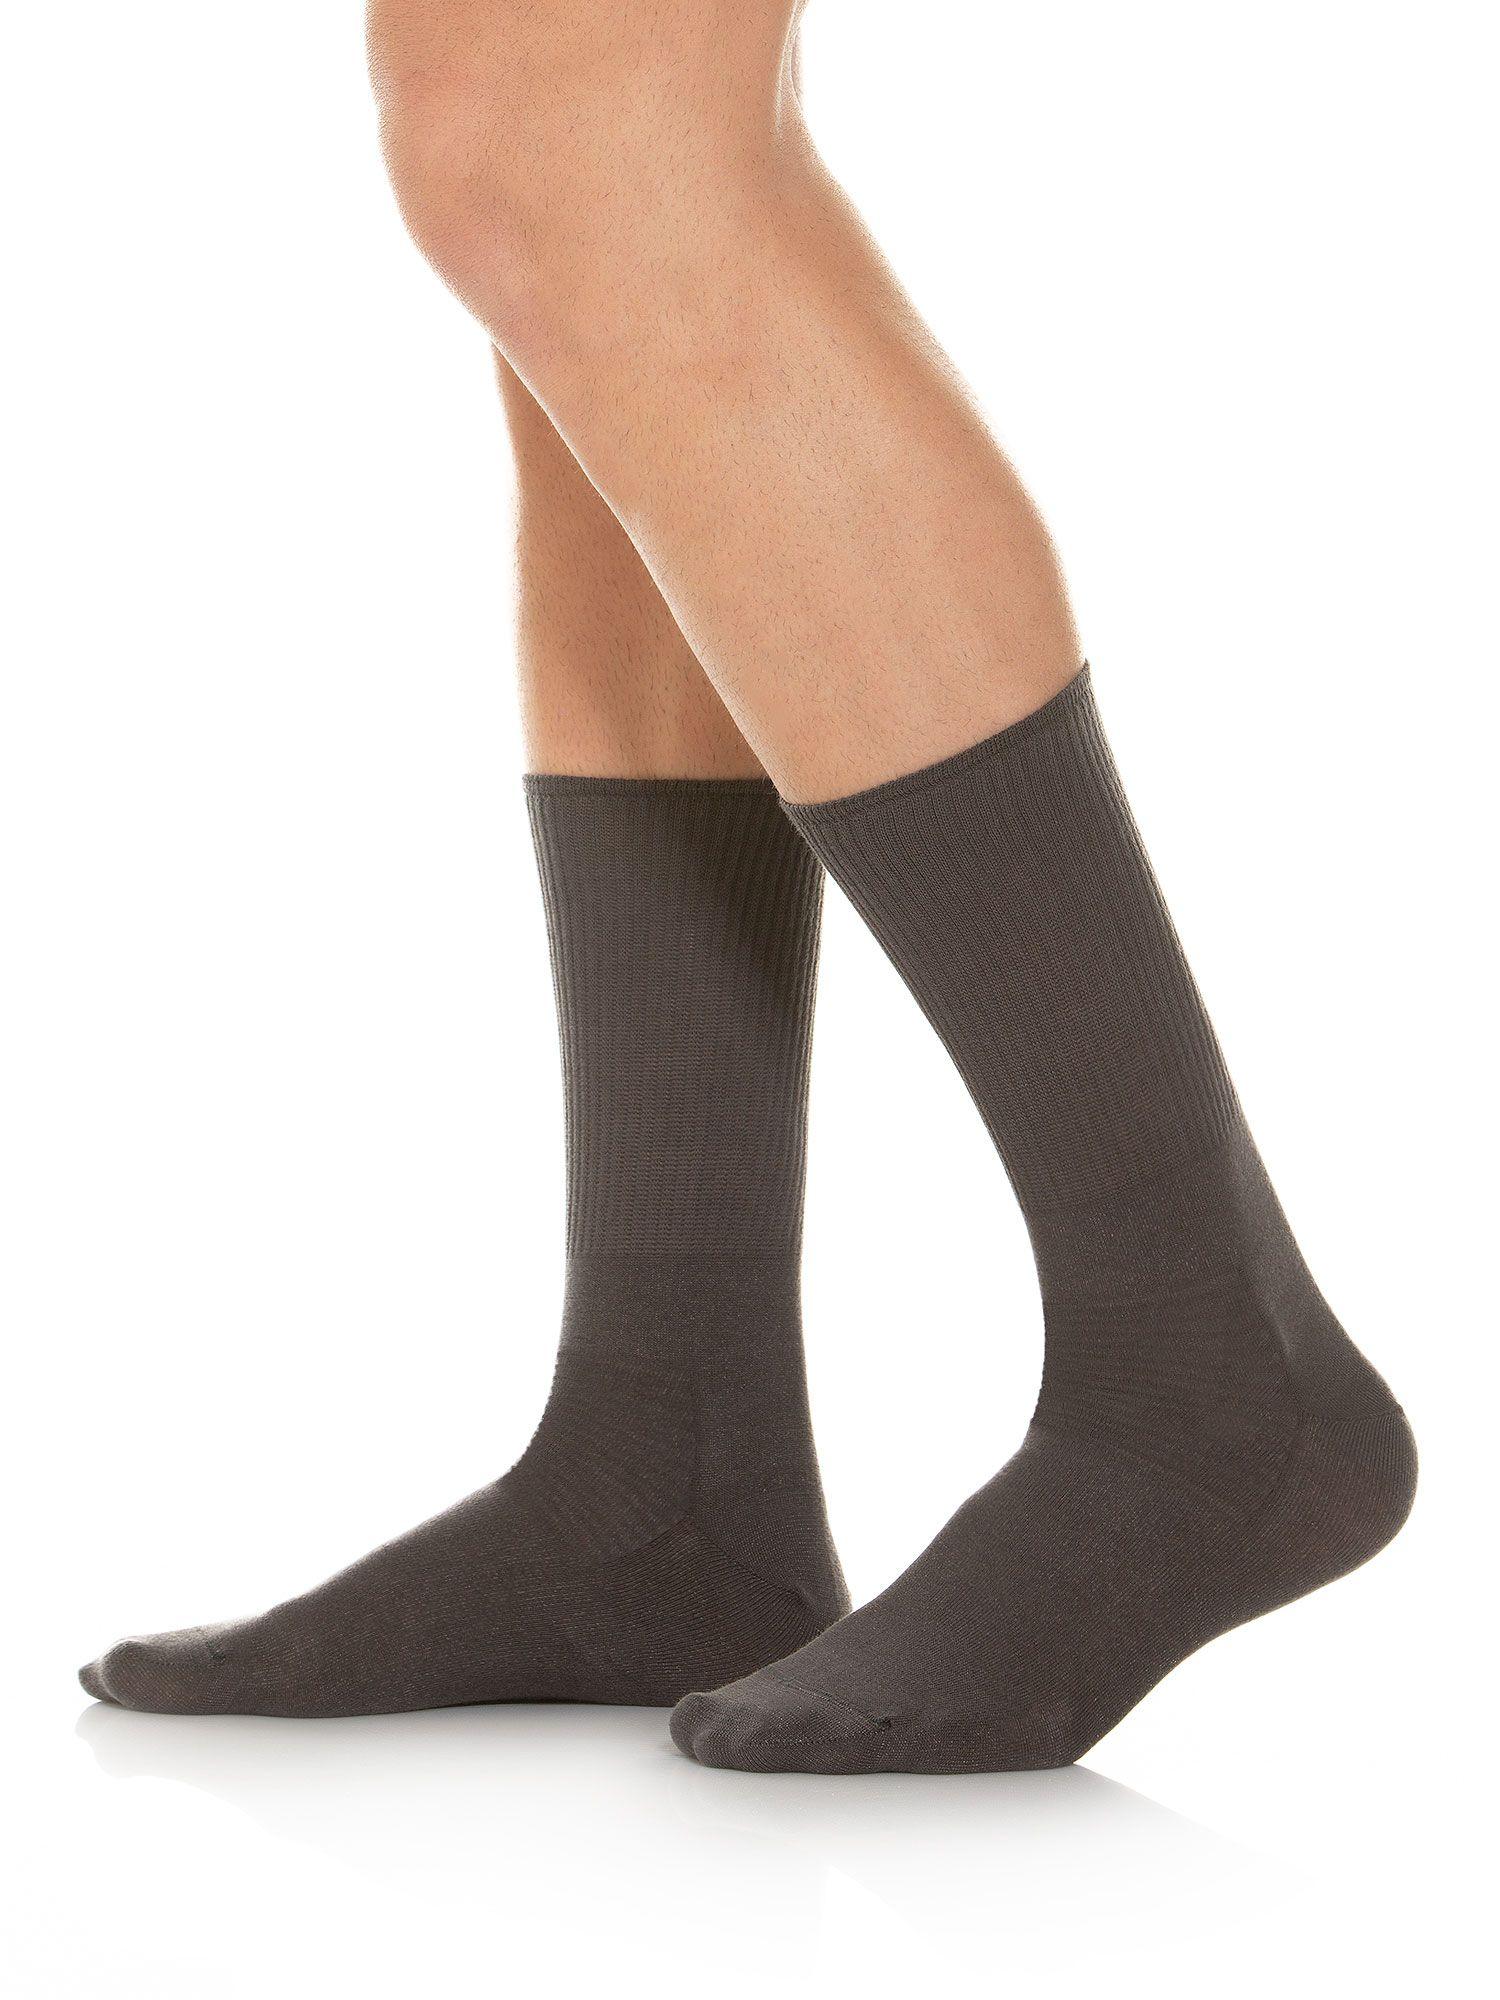 Diabetic socks with X-Static Silver fibre - Wellness Shoppee